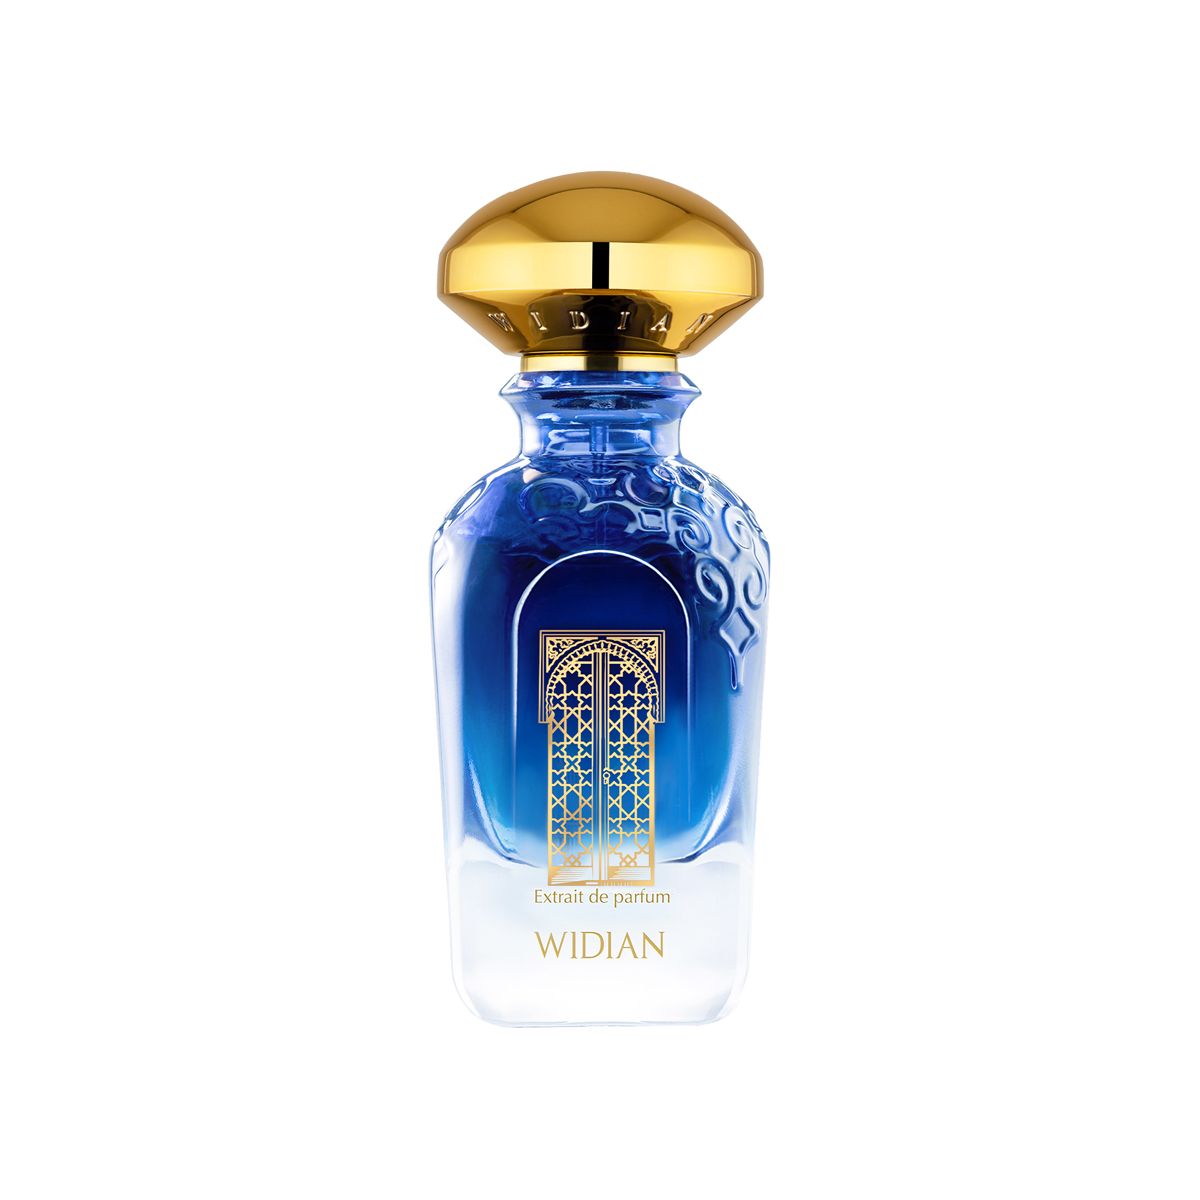 Widian - Granada Extrait de Parfum